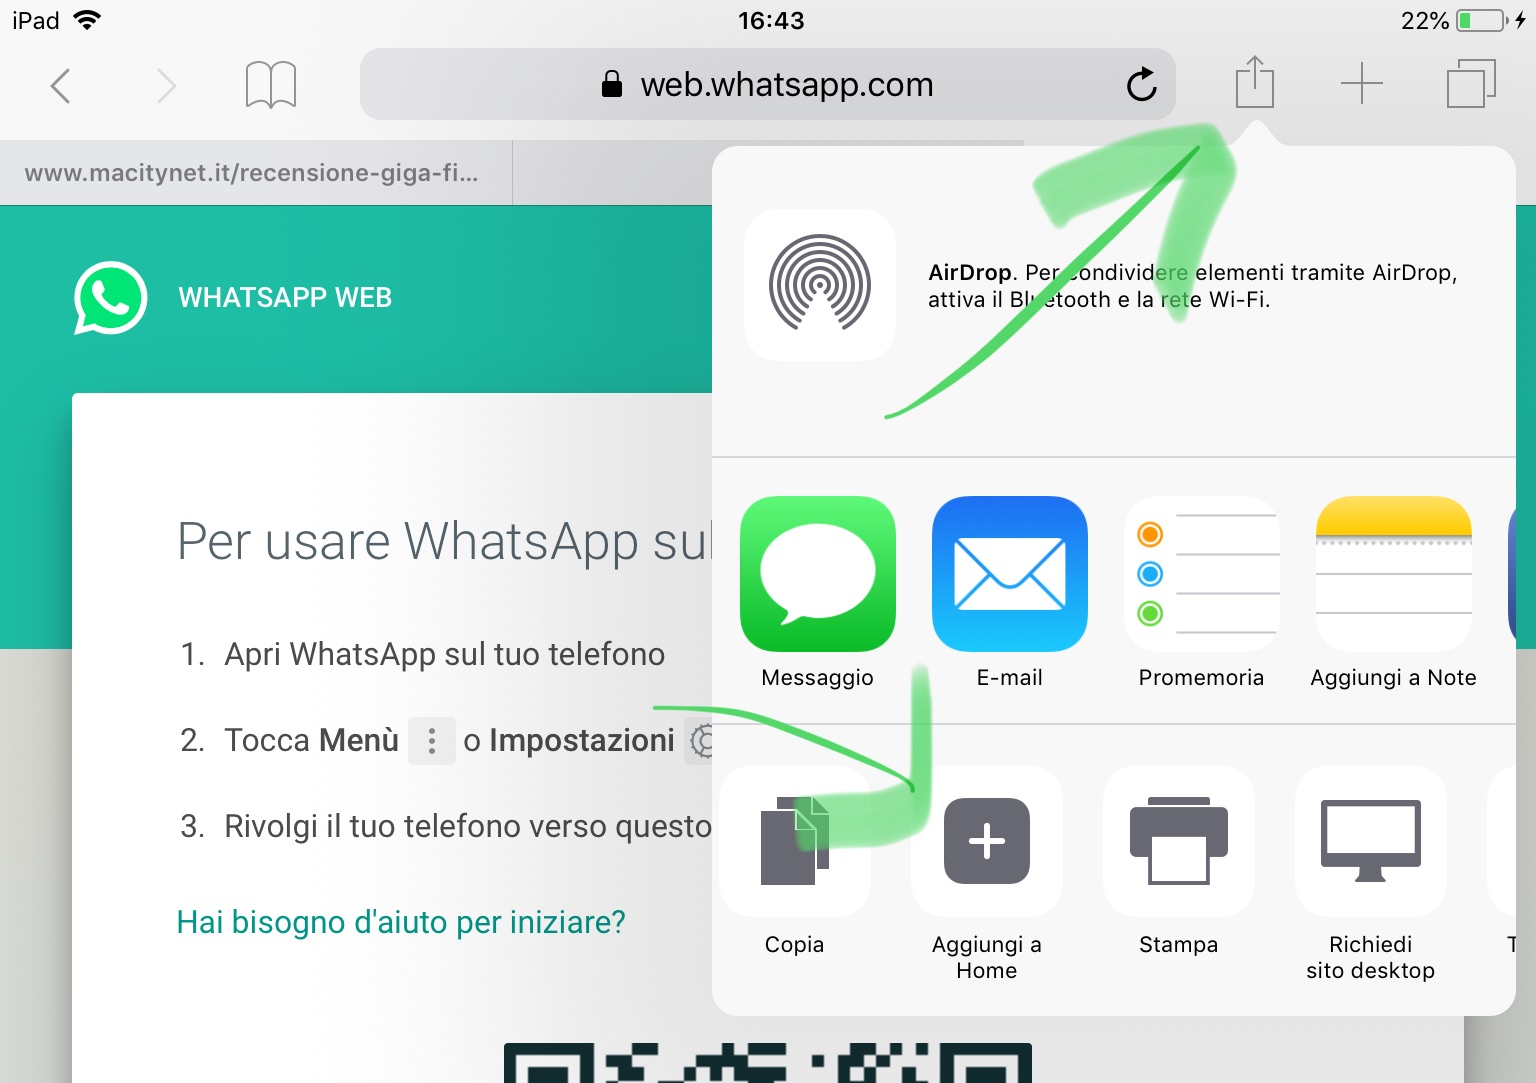 Таким образом, у вас будет веб-значок Whatsapp для iPad прямо на главной странице вашего планшета